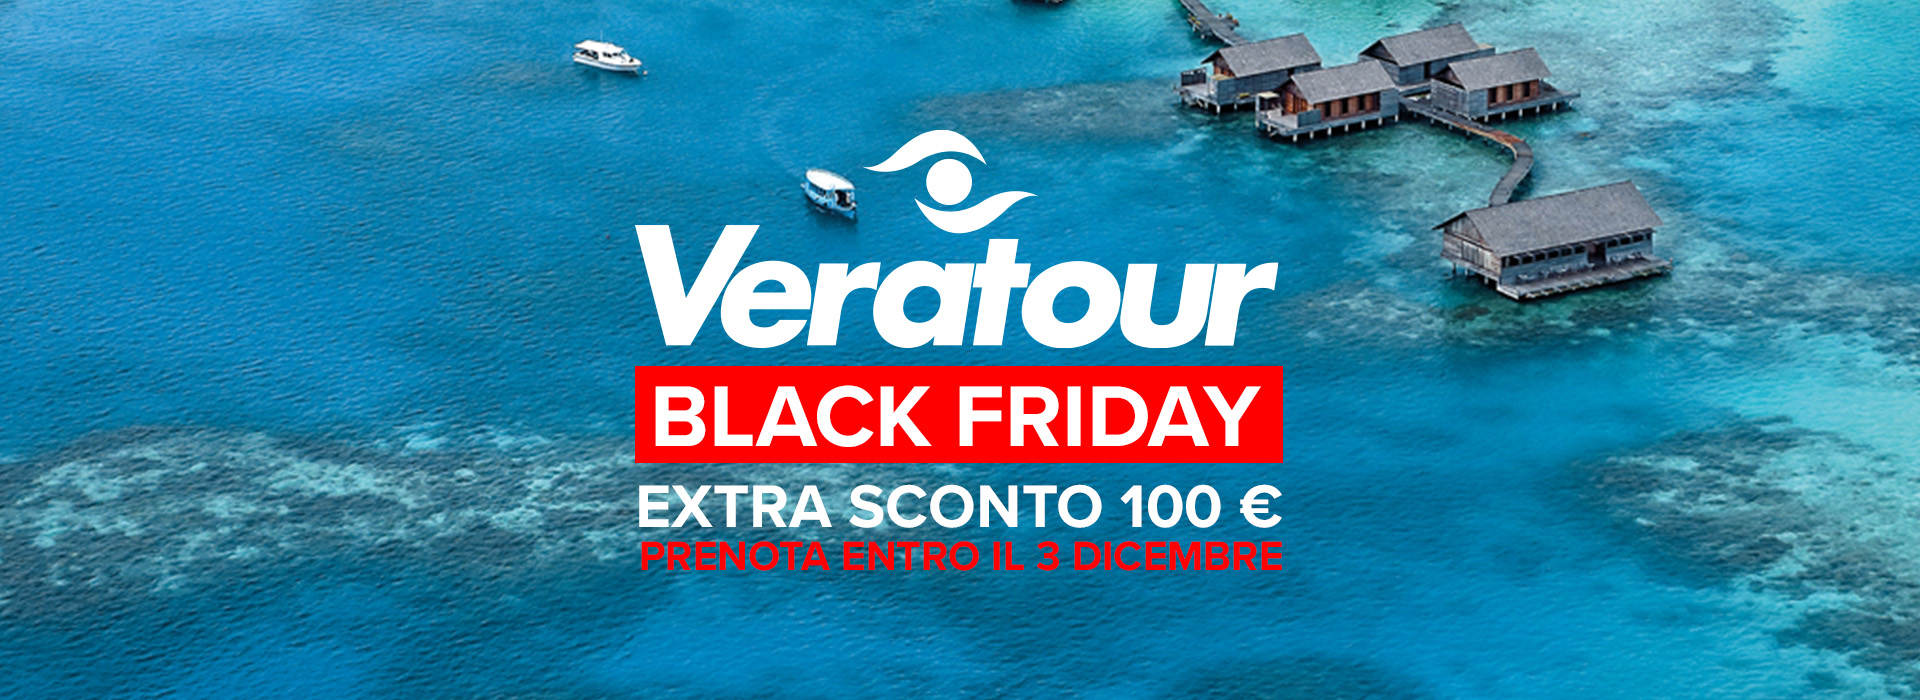 Black Friday Veratour: Extra sconto 100 €